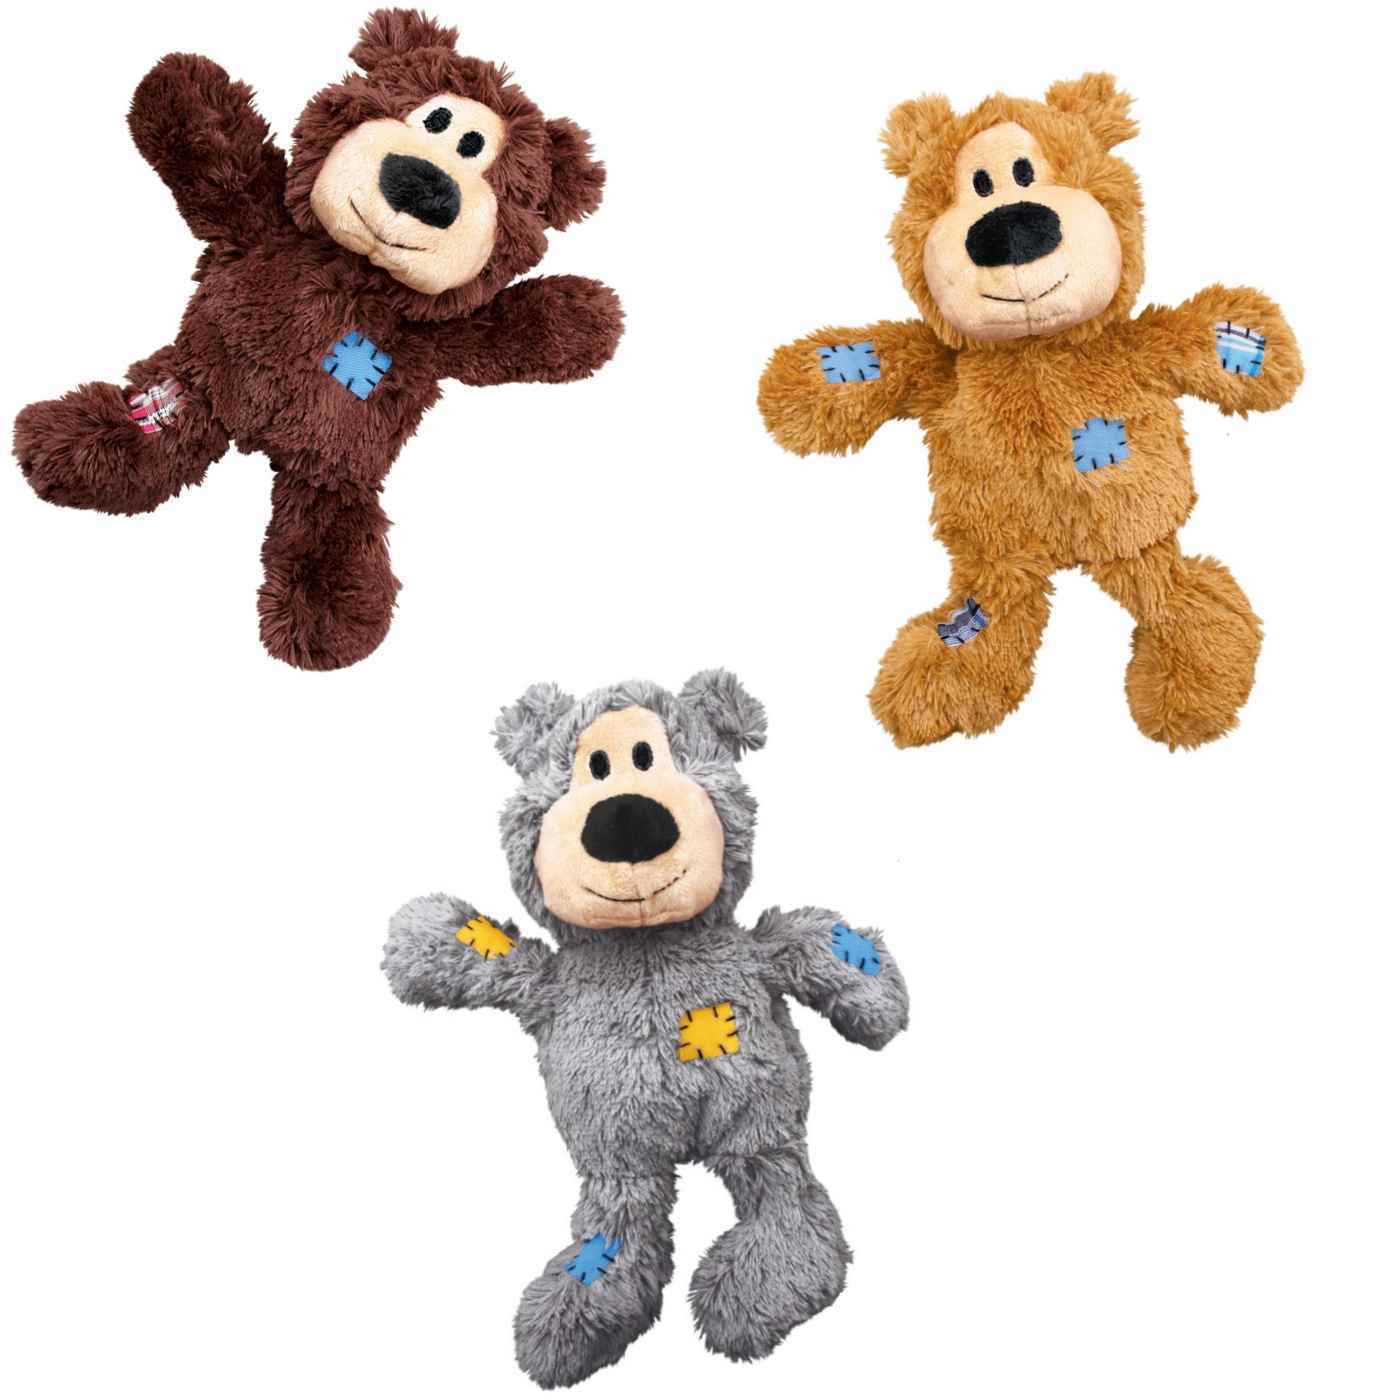 3 x KONG Wild Knots Bear Tug & Snuggle Plush Dog Toy - Small/Medium image 0